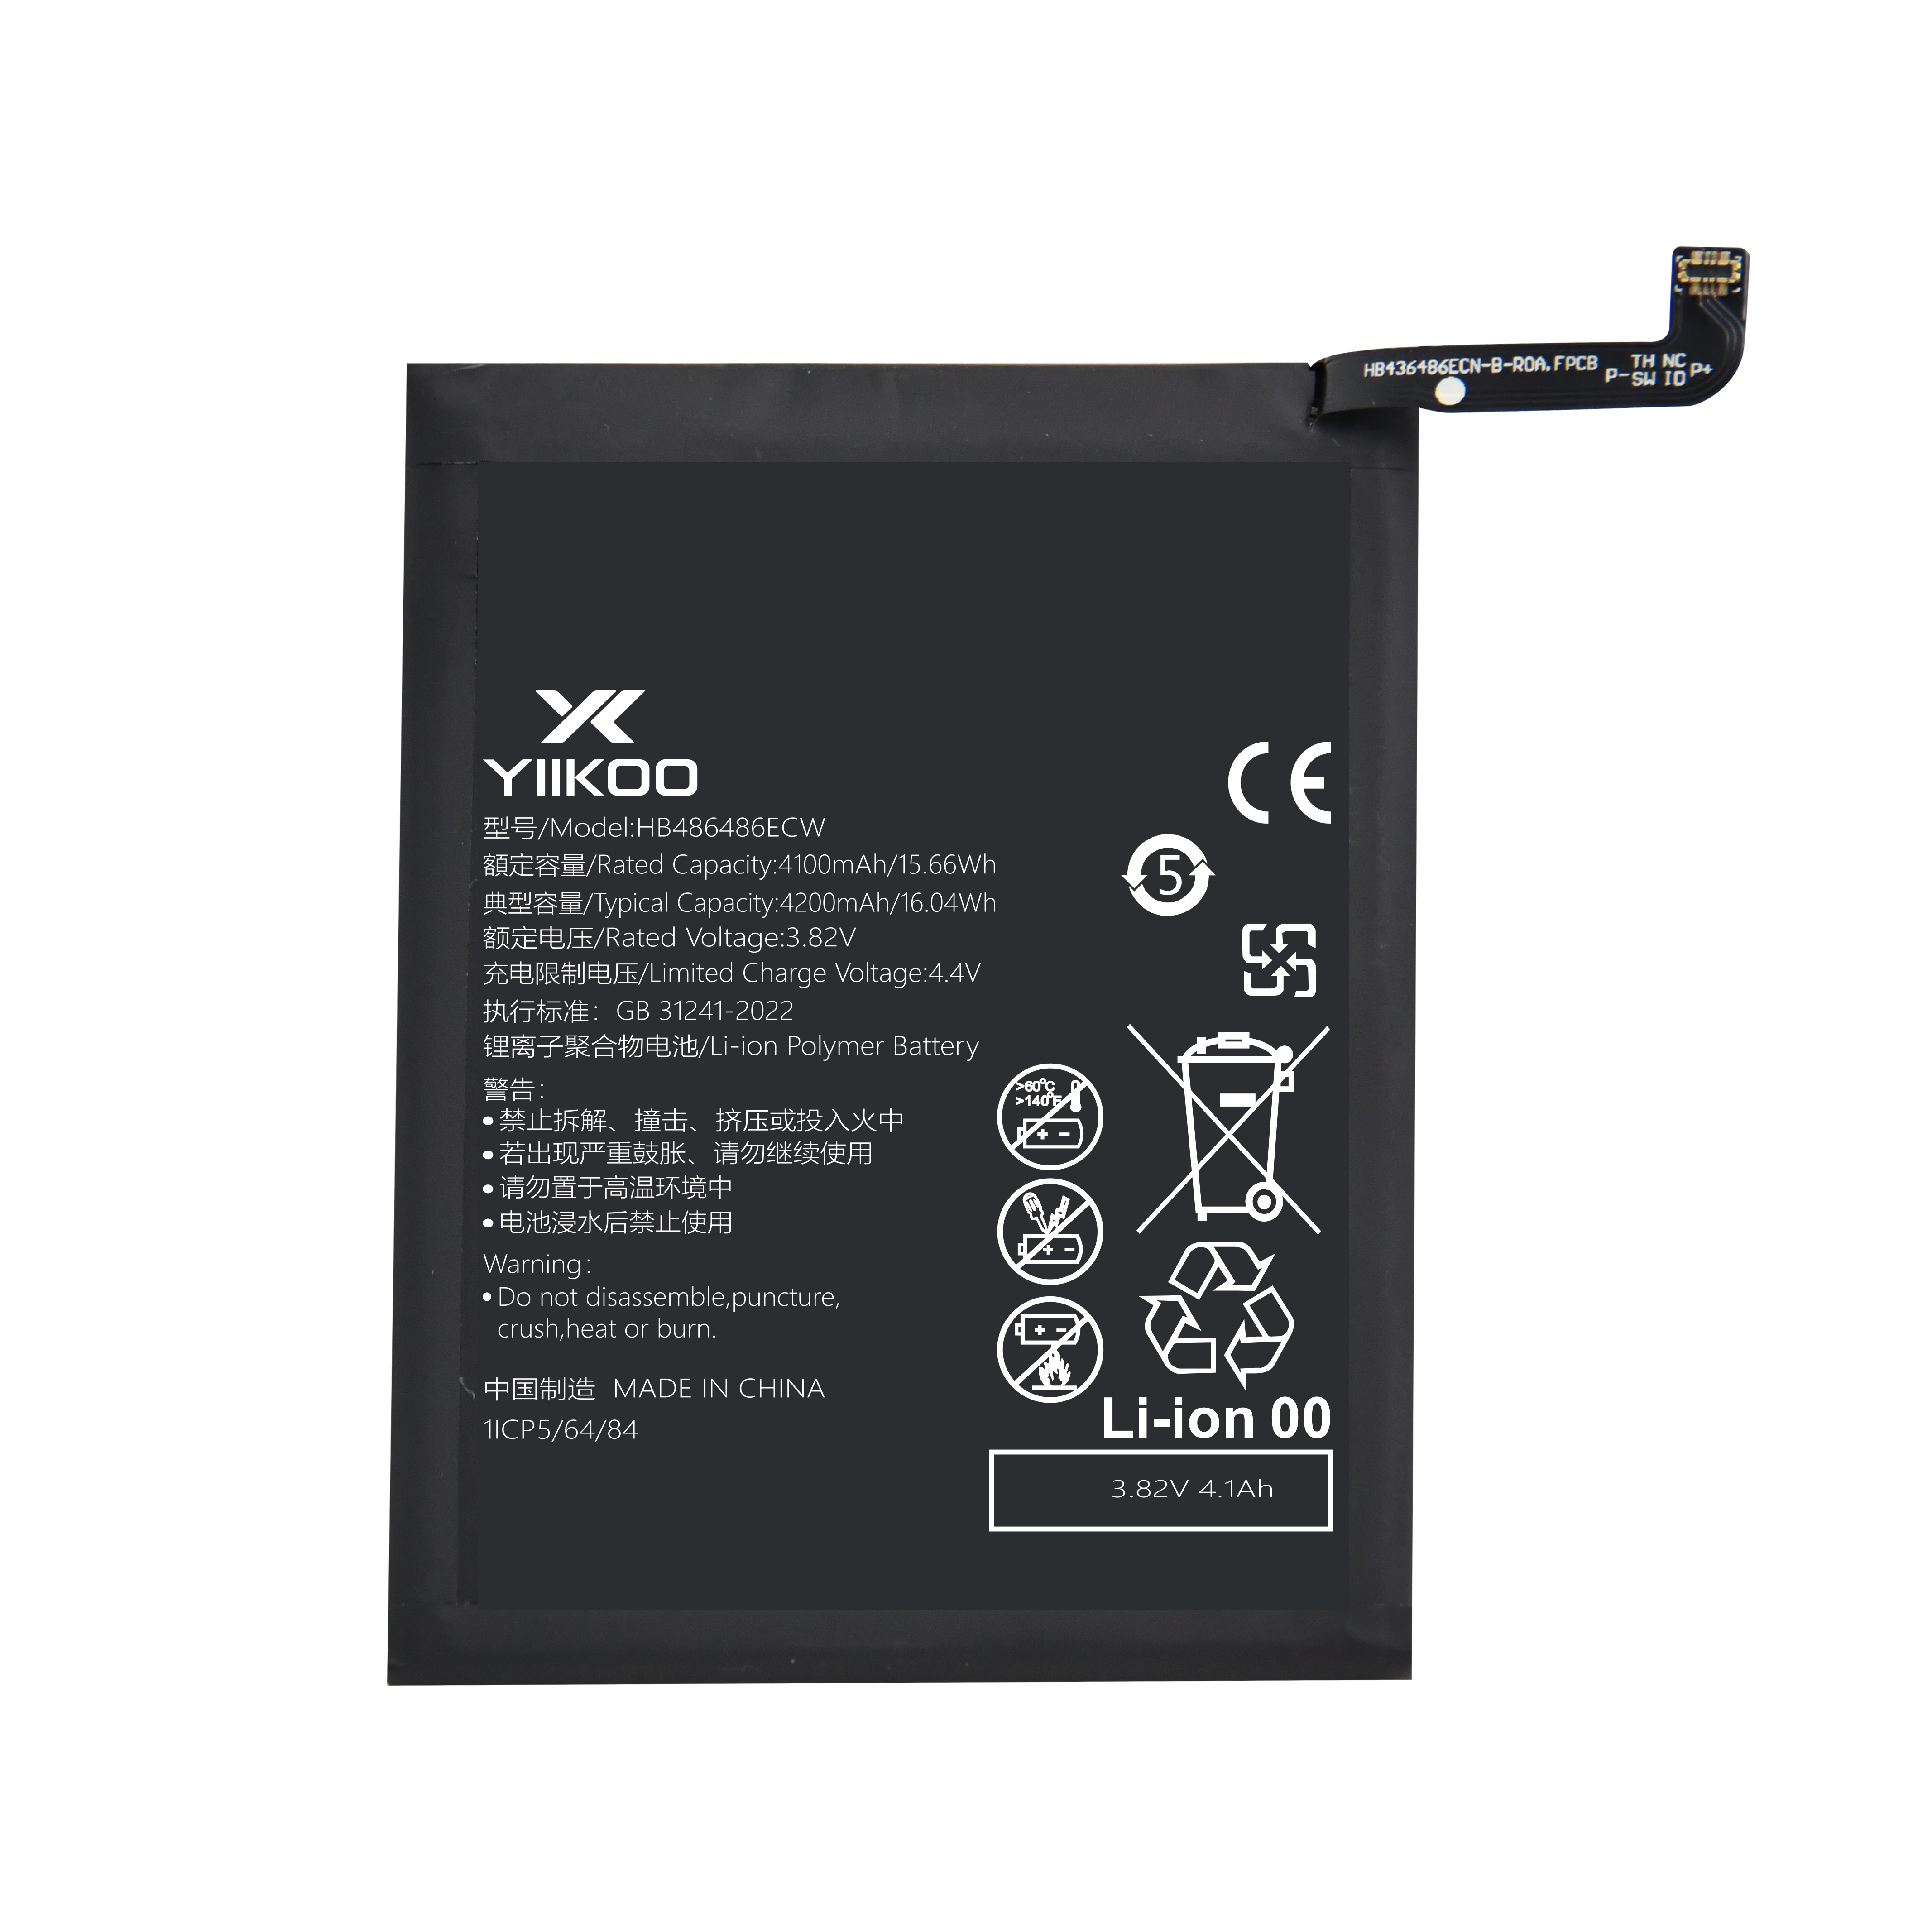 Huawei P30 pro/mate20pro/Mate20X 5G Batterij (4100mAh) HB486486ECW